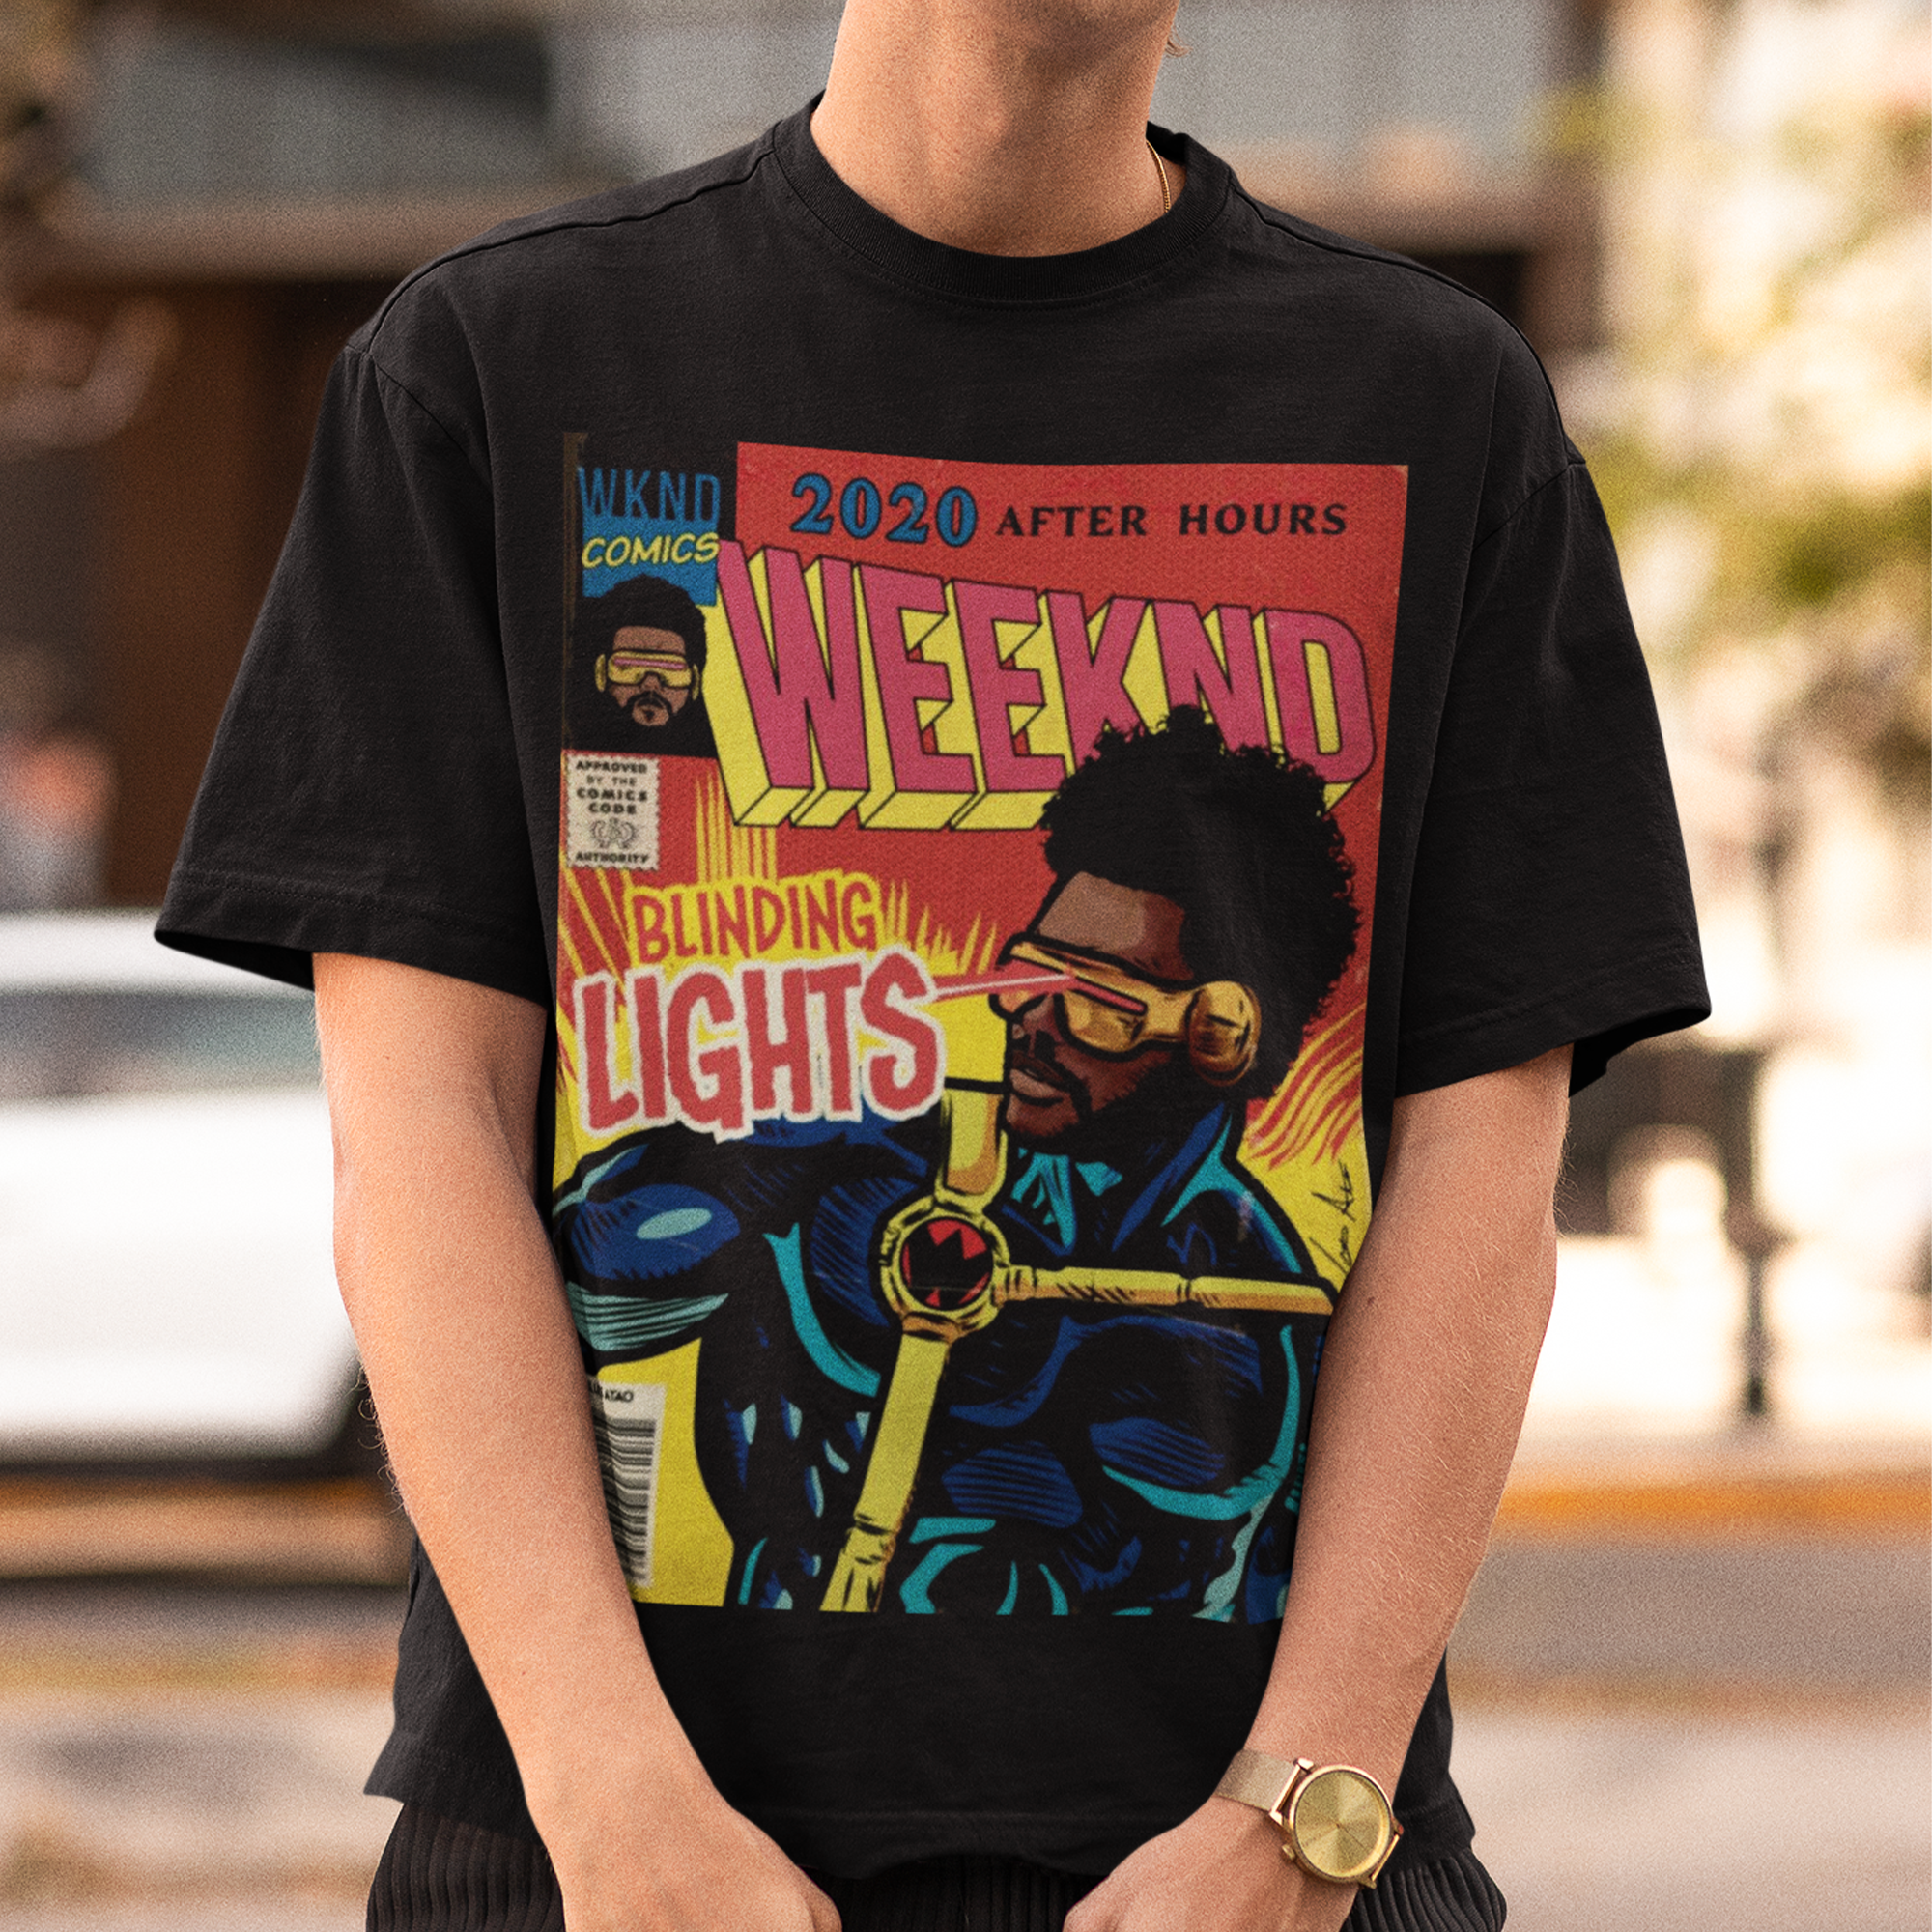 Blinding Lights Comic Hoodie Long Sleeve The Weeknd Tour The